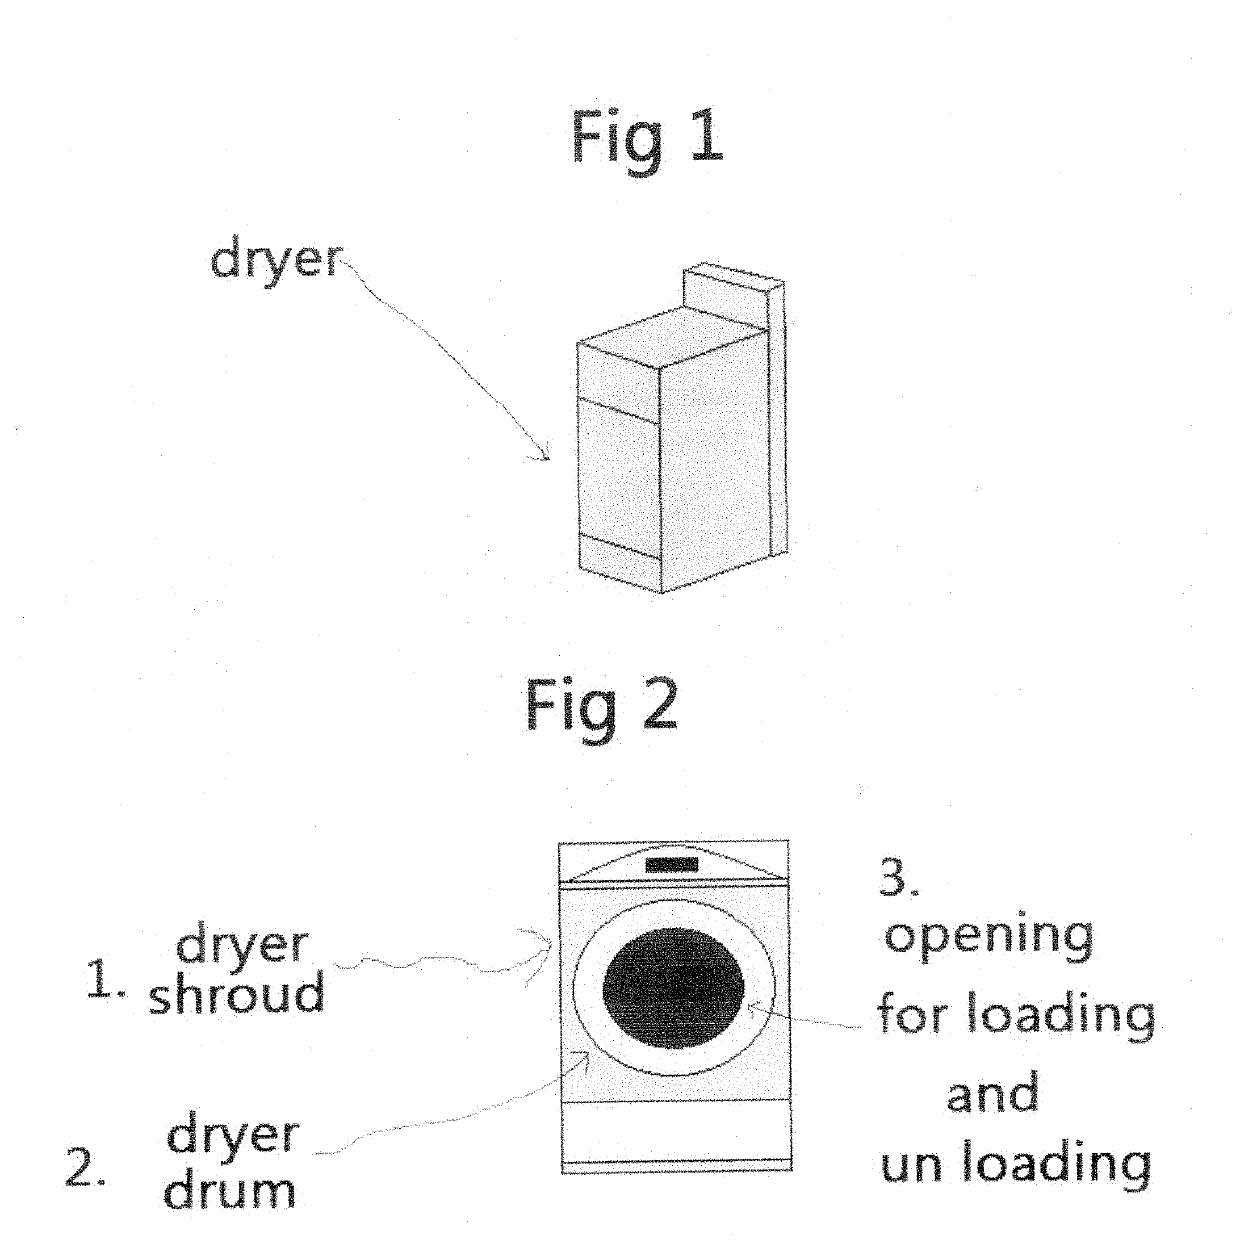 Method for having cleaner dried laundry